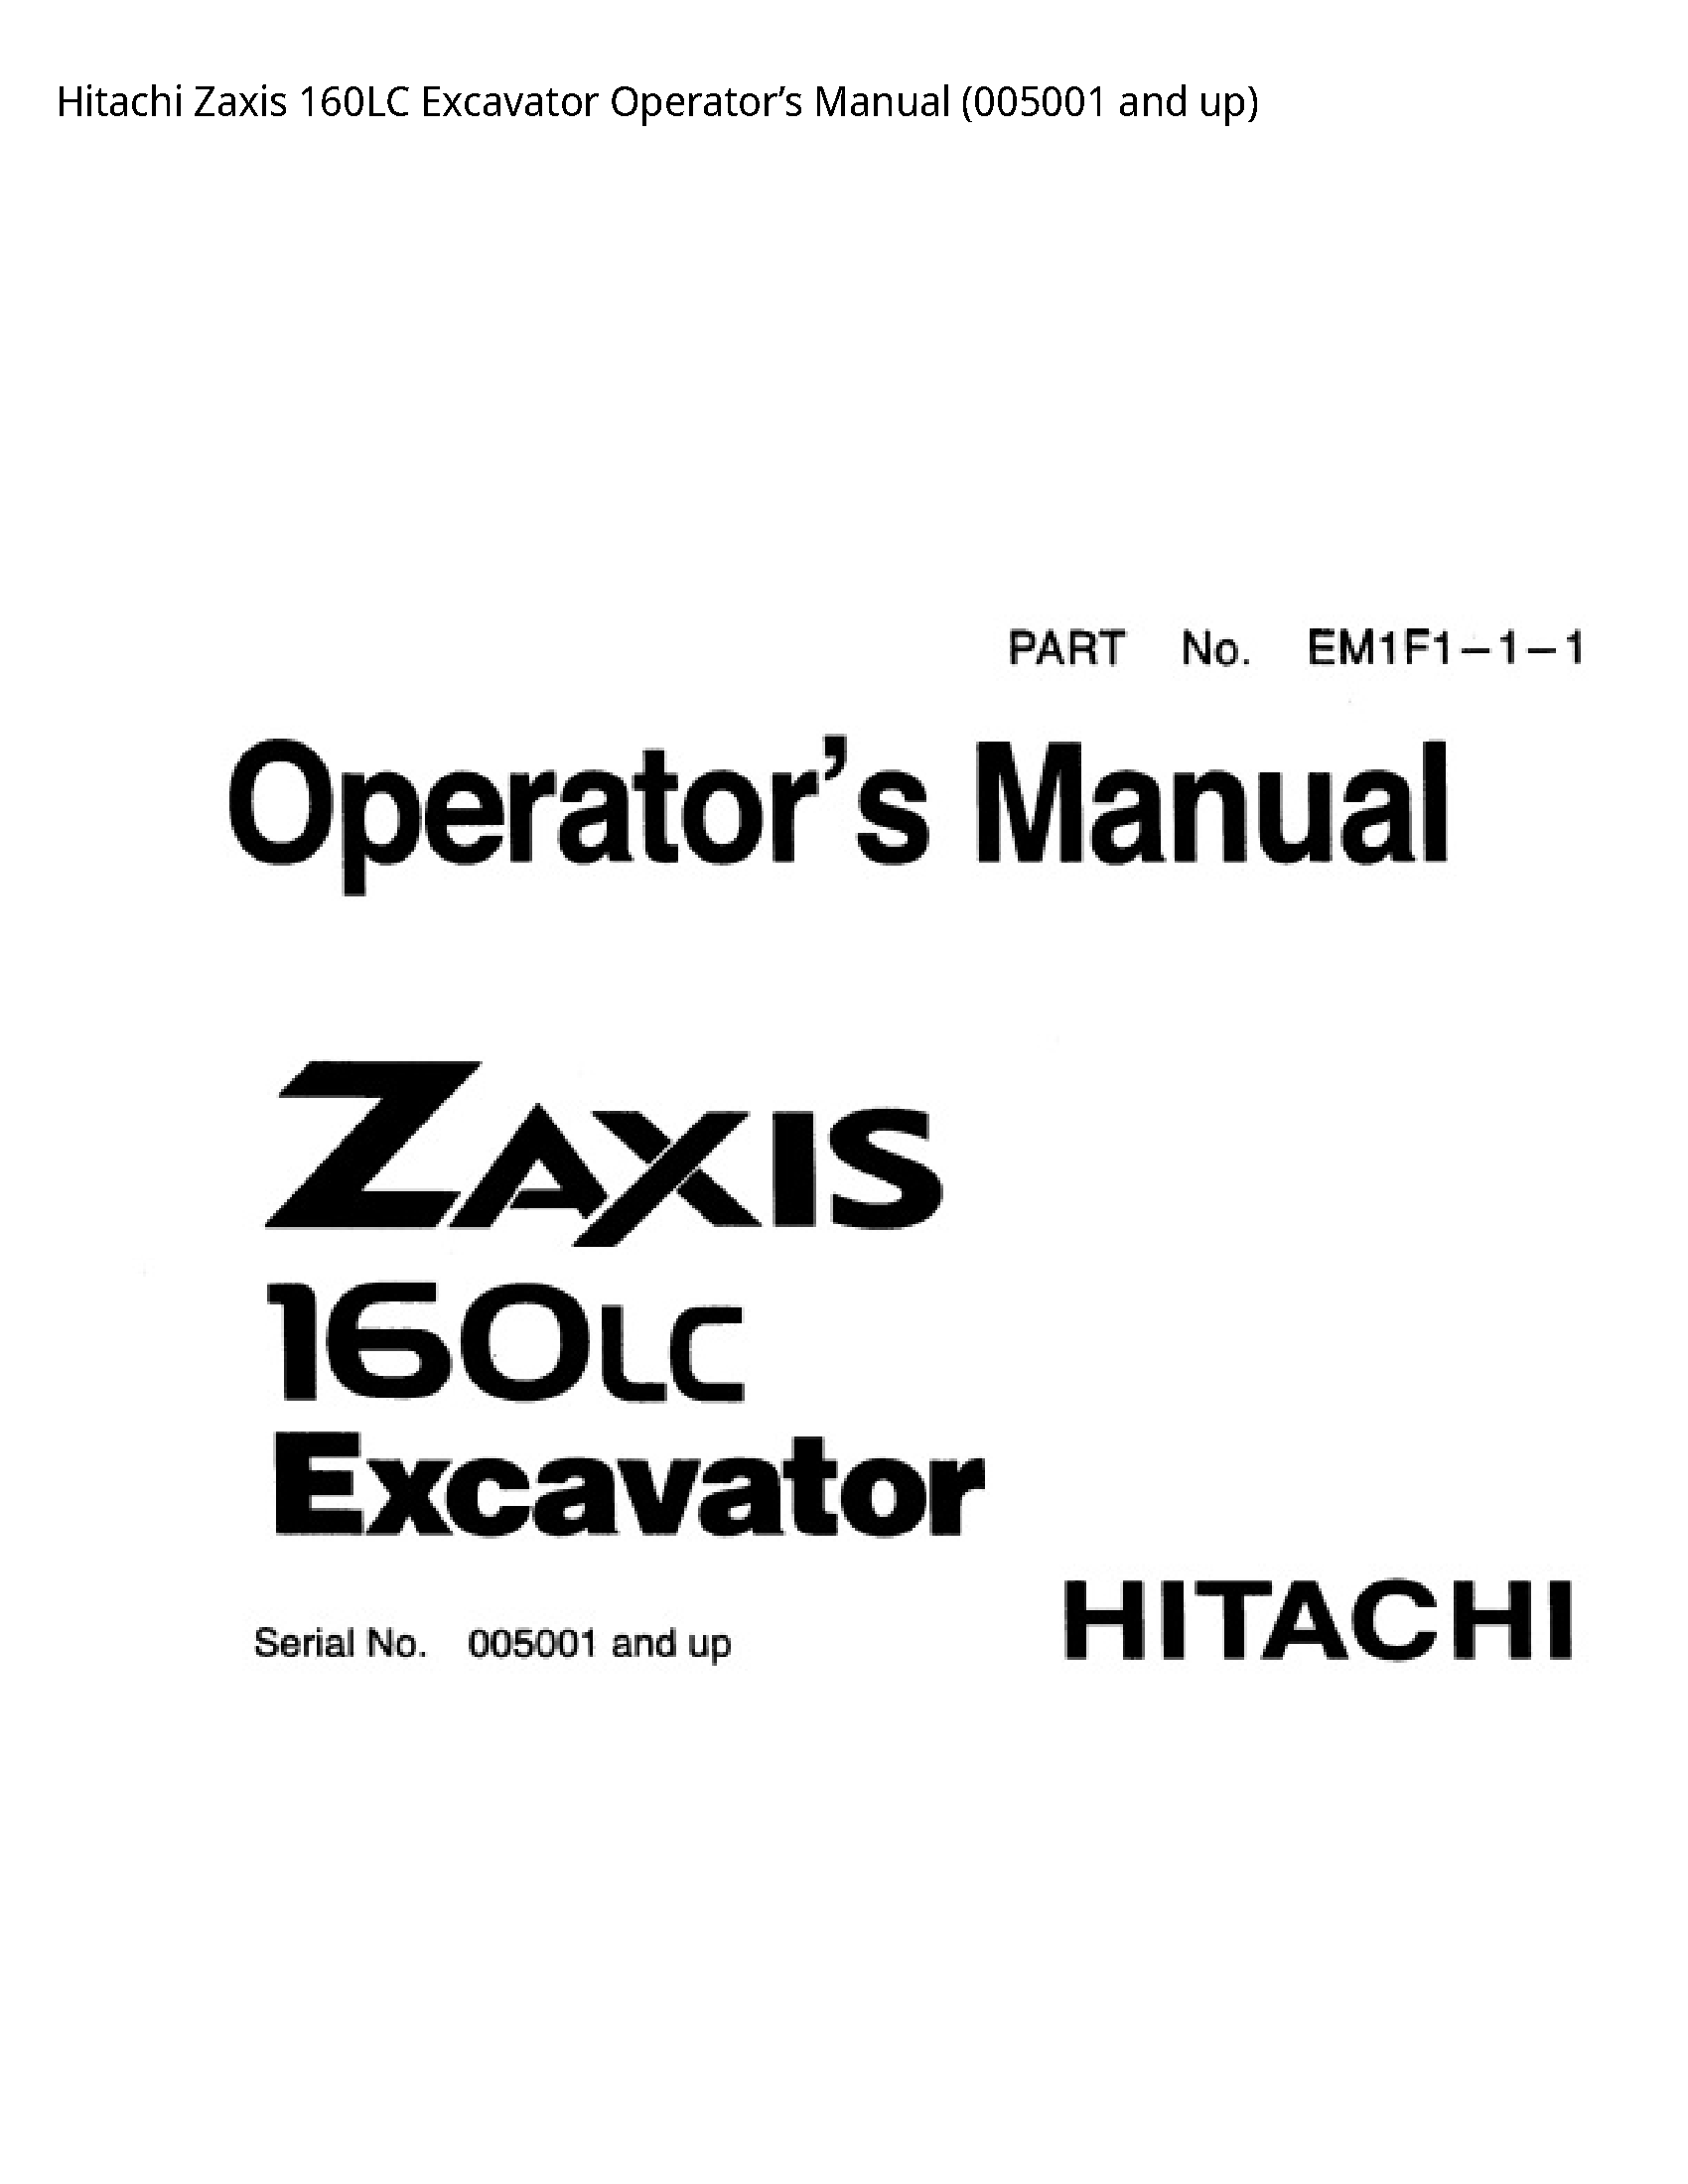 Hitachi 160LC Zaxis Excavator Operator’s manual